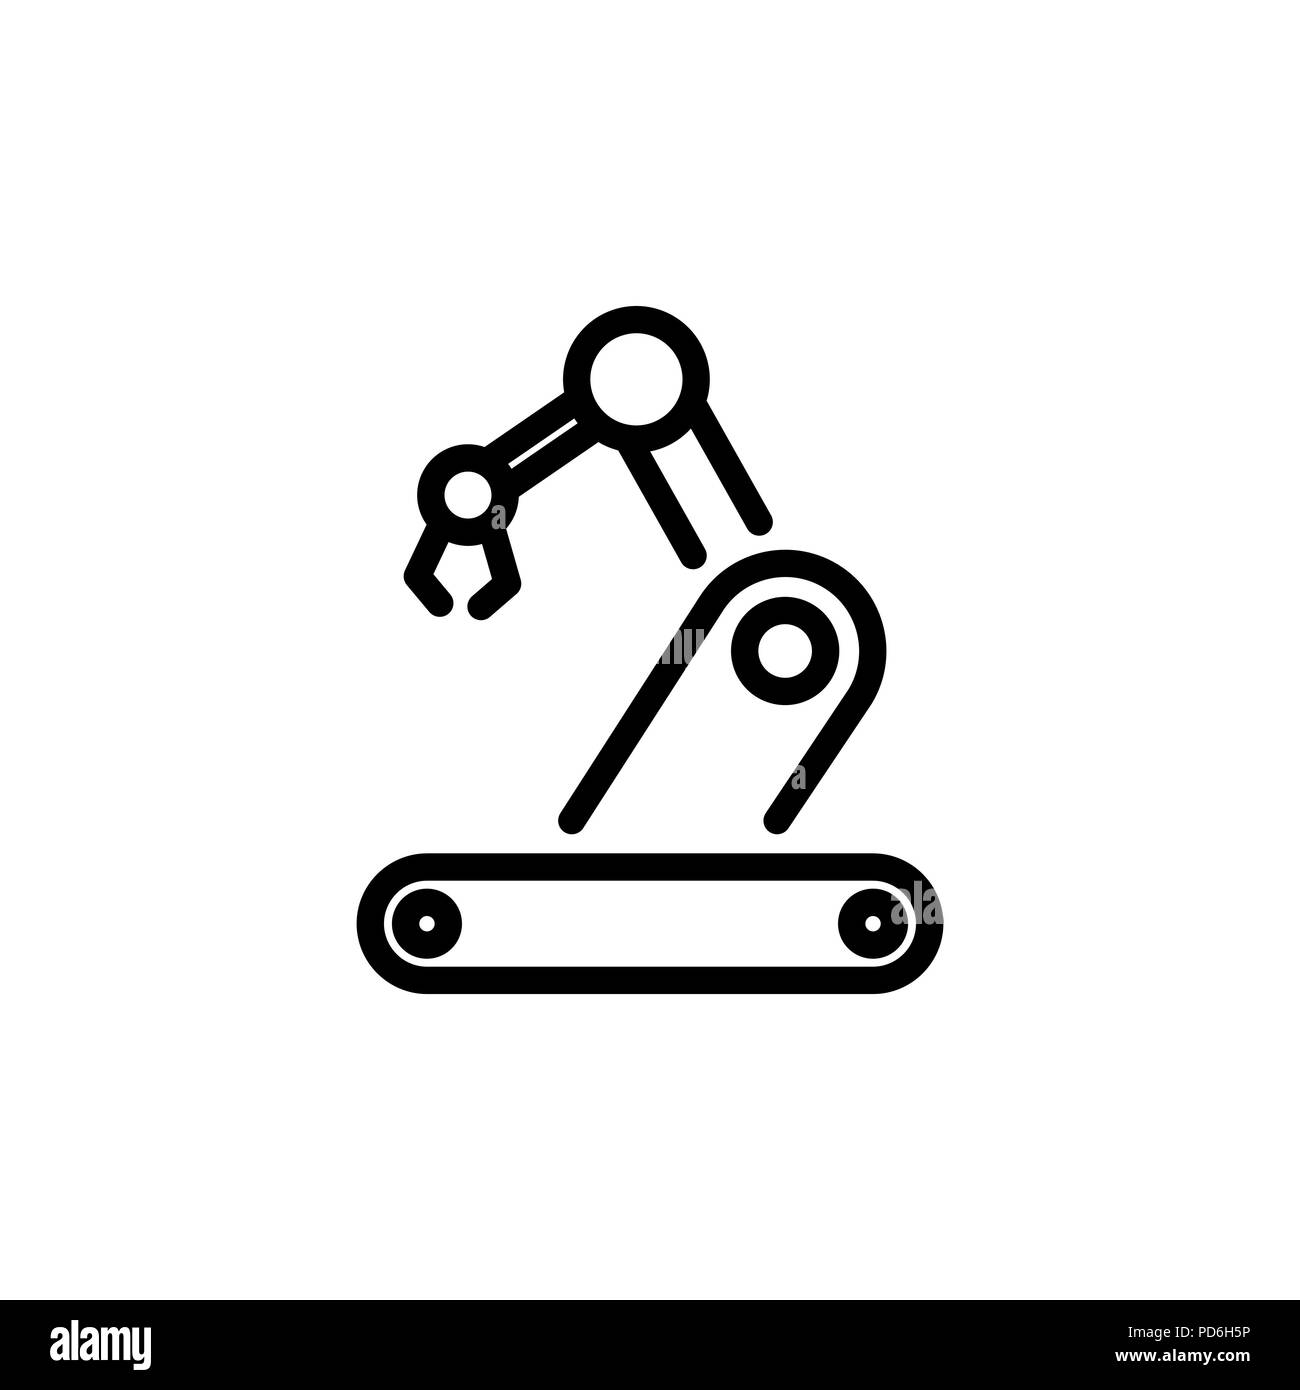 Robotics icon simple flat style outline illustration. Stock Vector